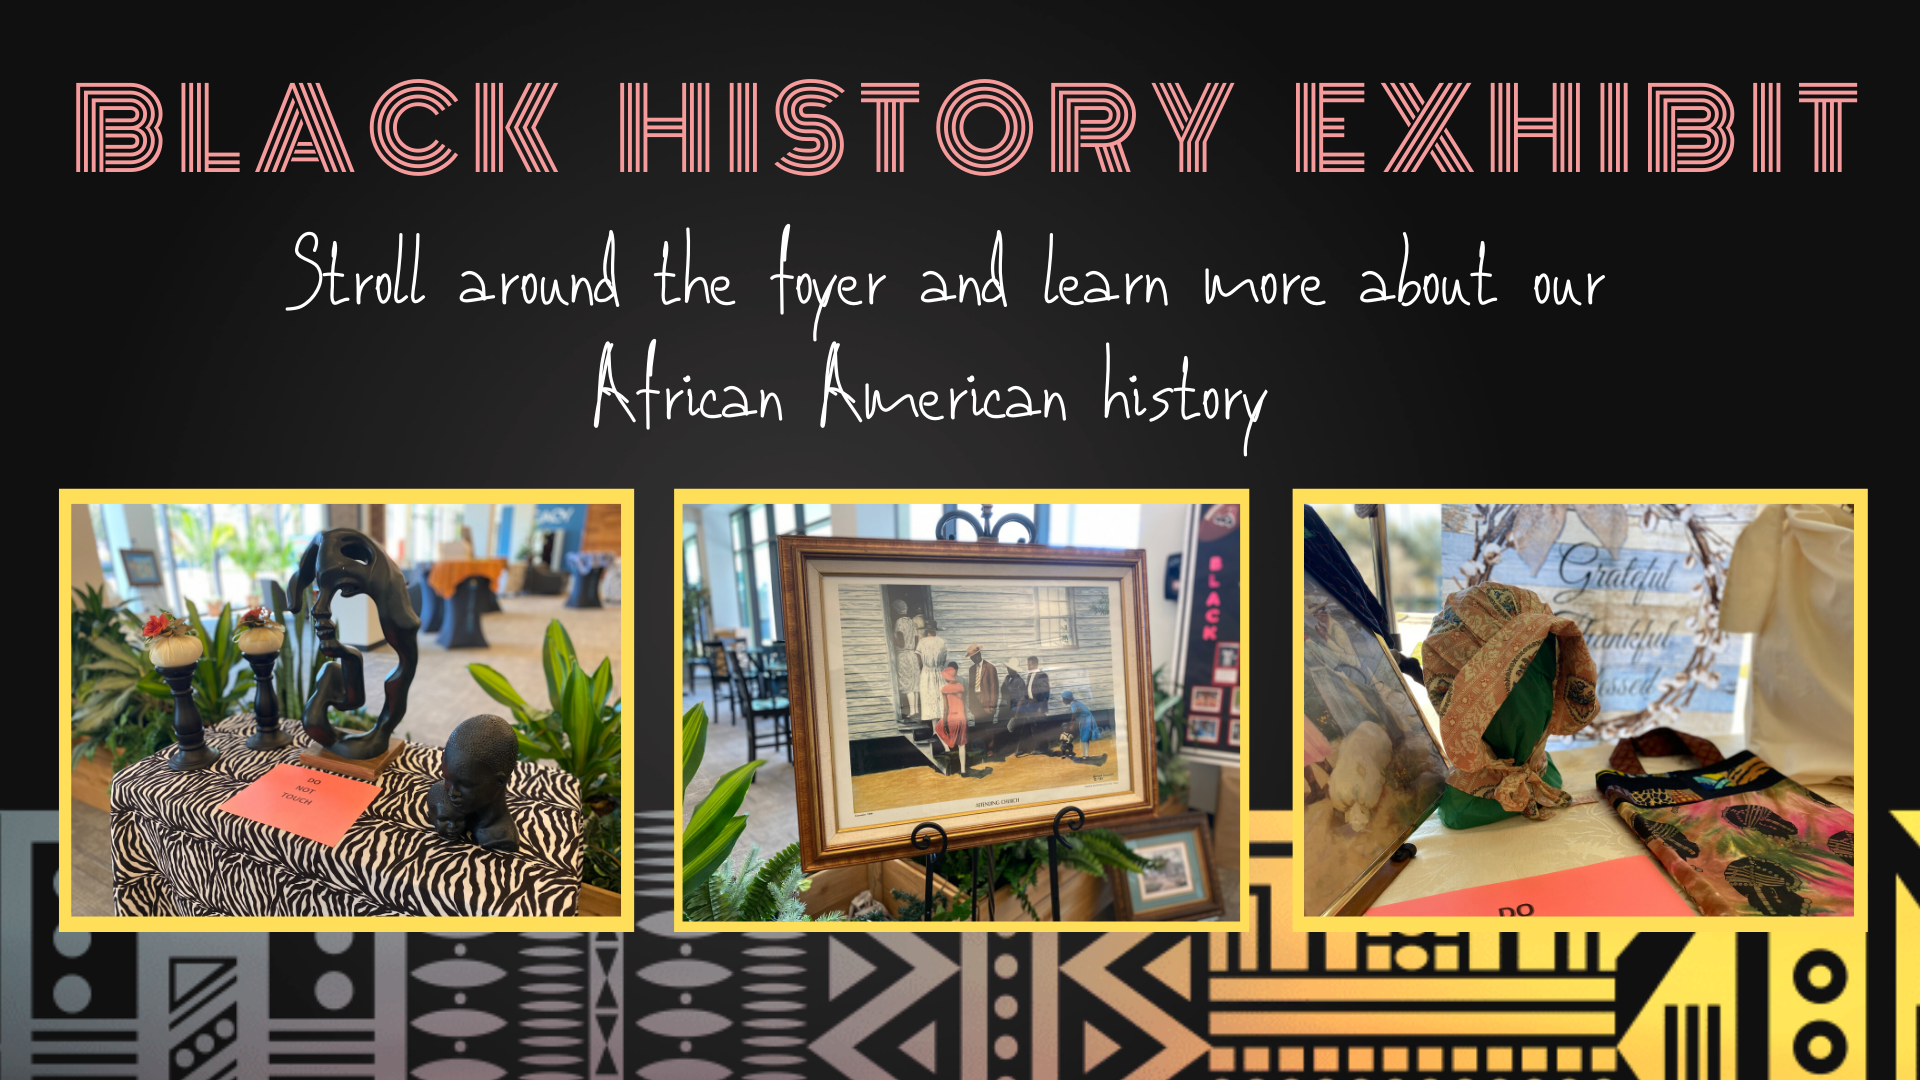 Black History Exhibit head image